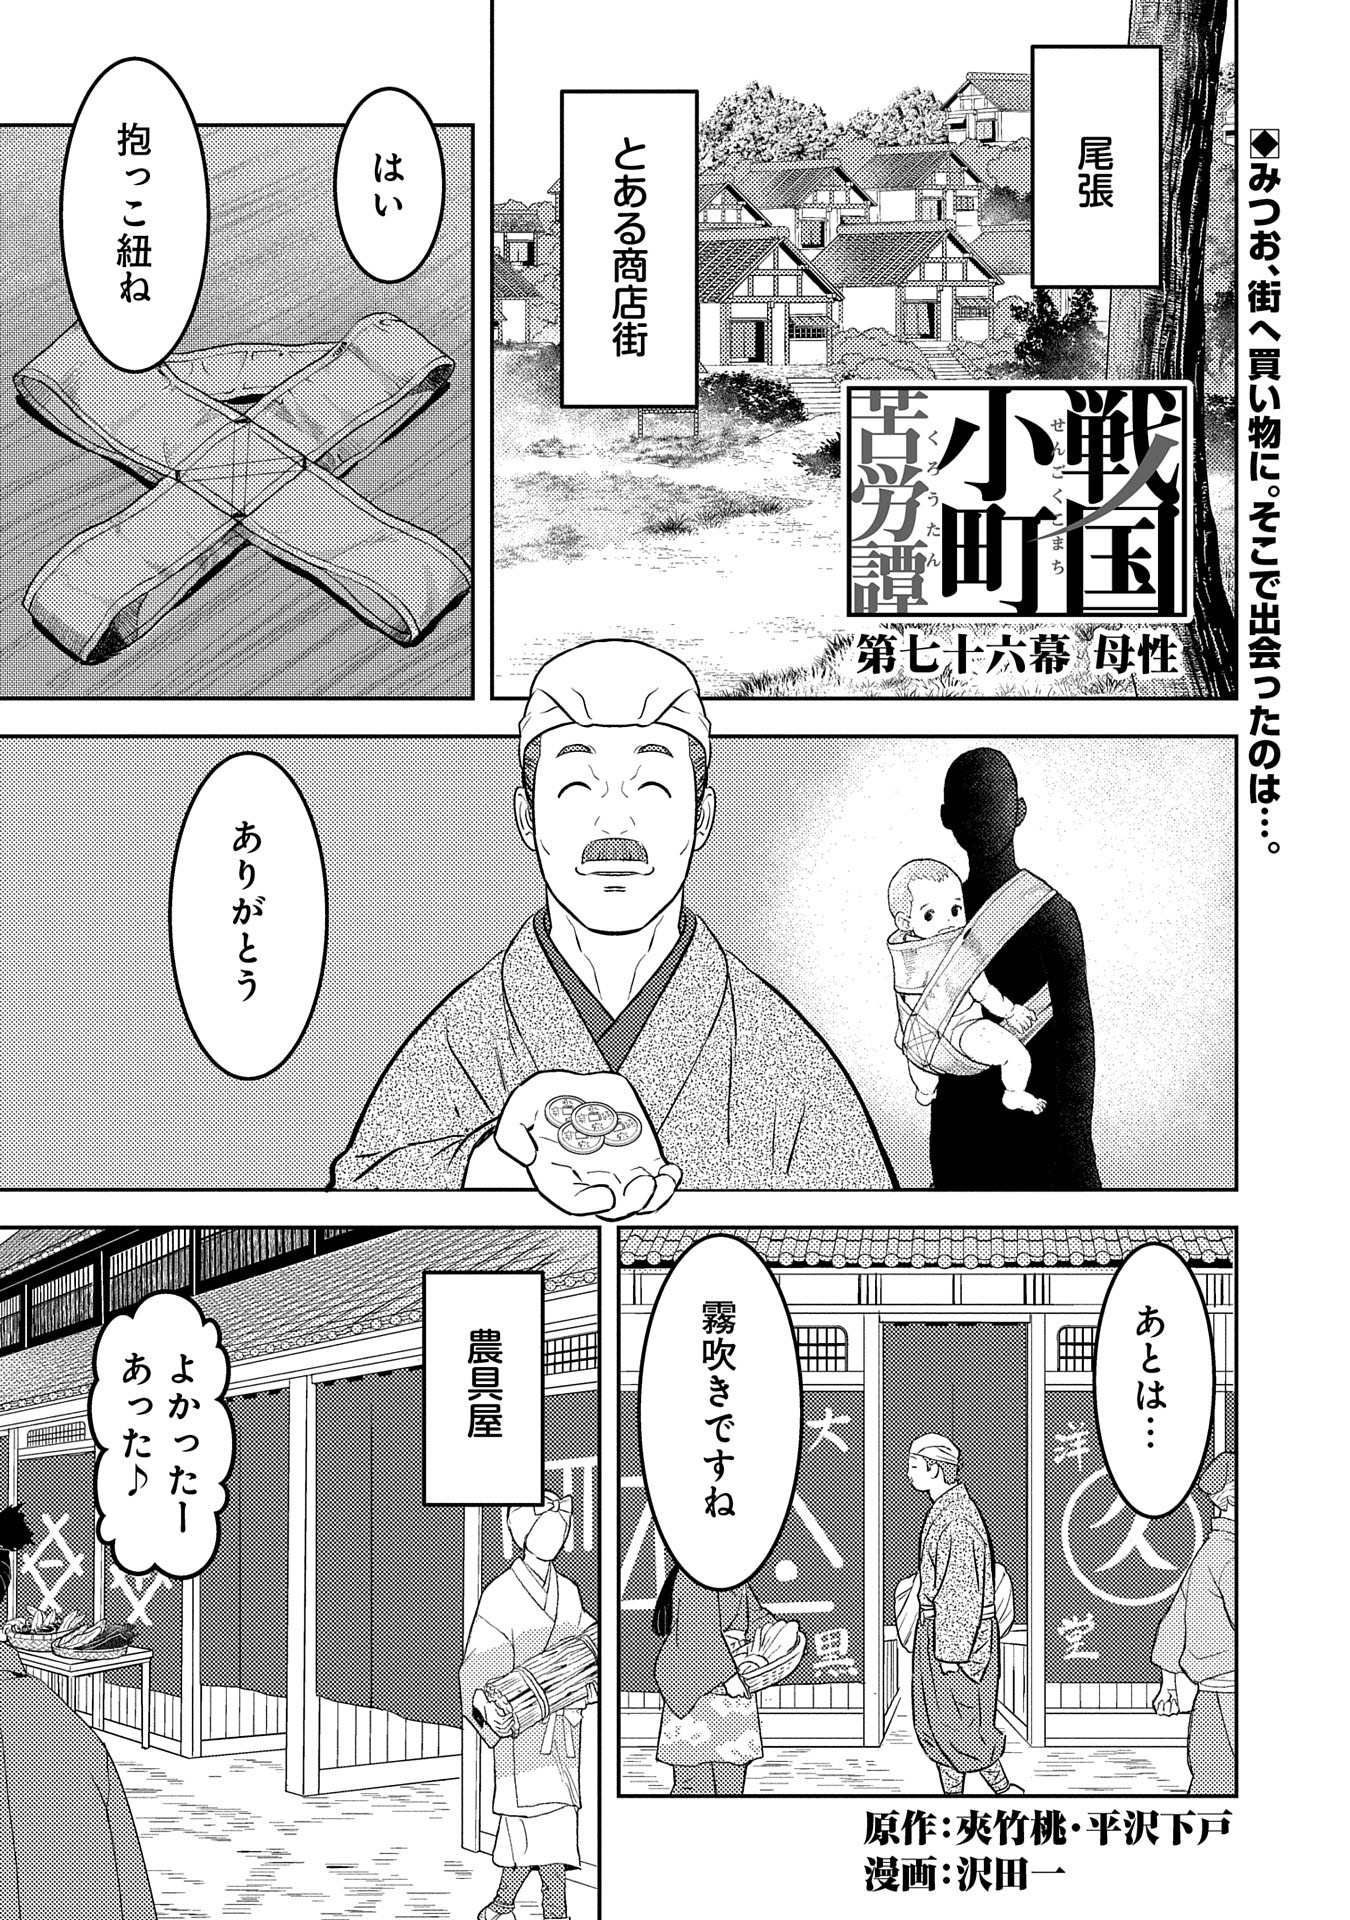 Sengoku Komachi Kuroutan - Chapter 76 - Page 1